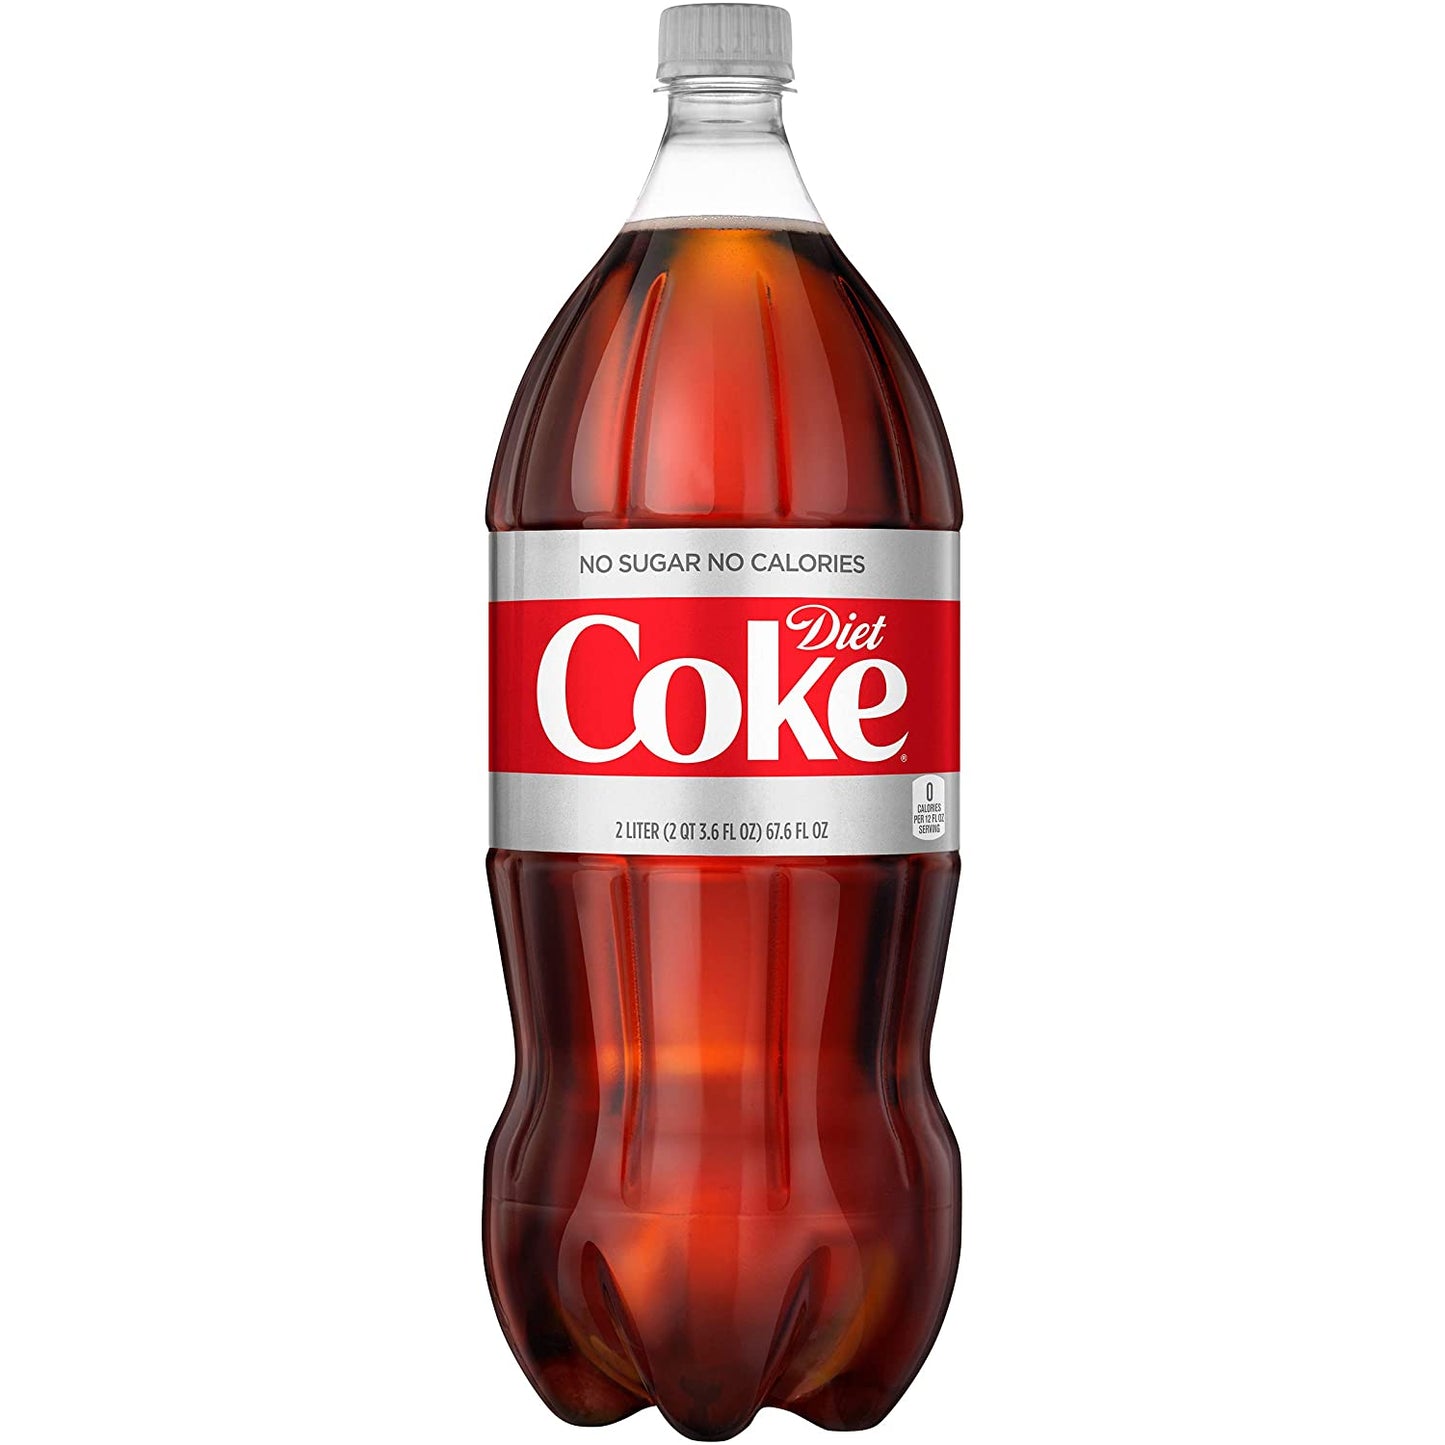 Pepsi Cola Zero Sugar Soda Pop, 2 Liter Bottle